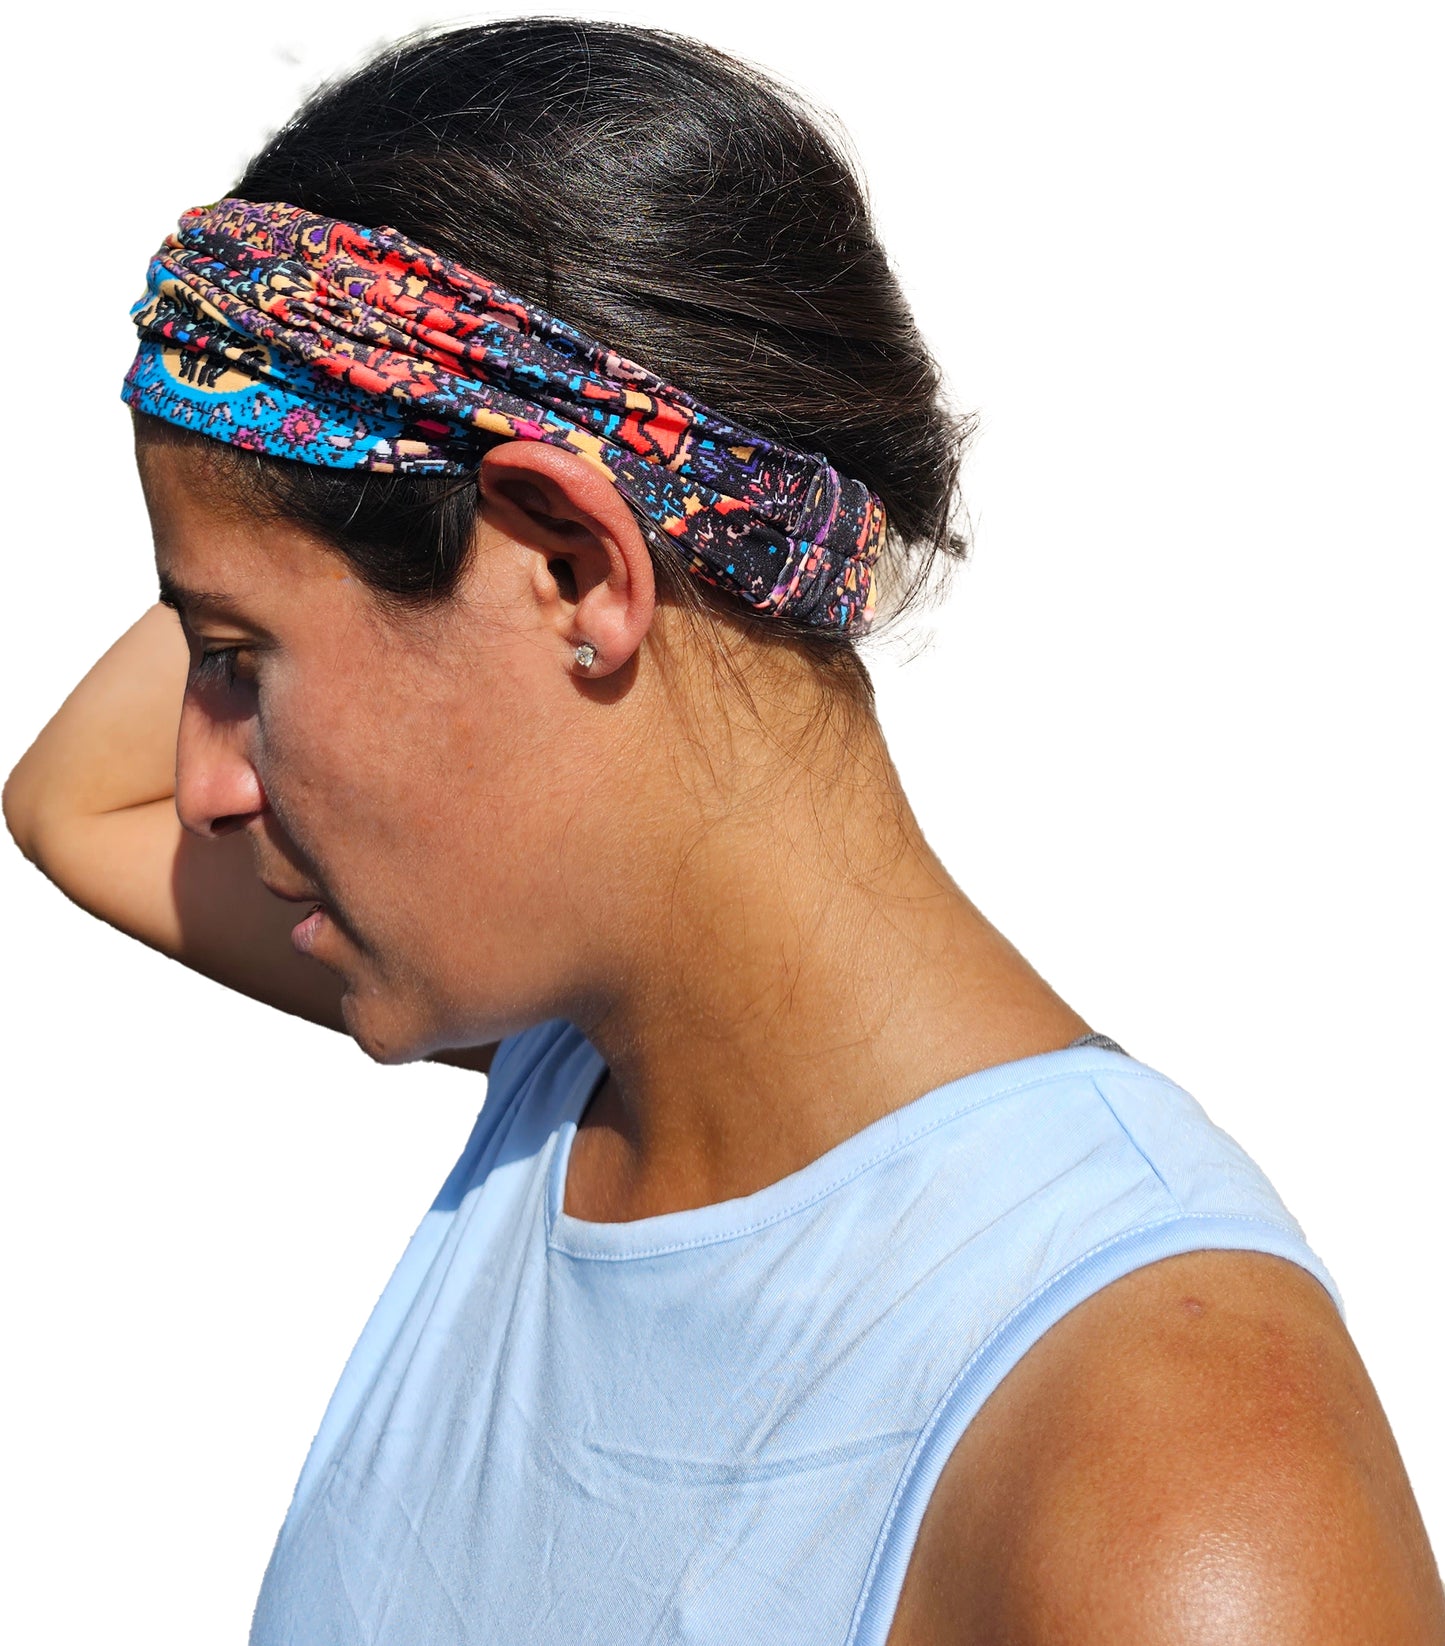 a woman with mandala headband headband on her head